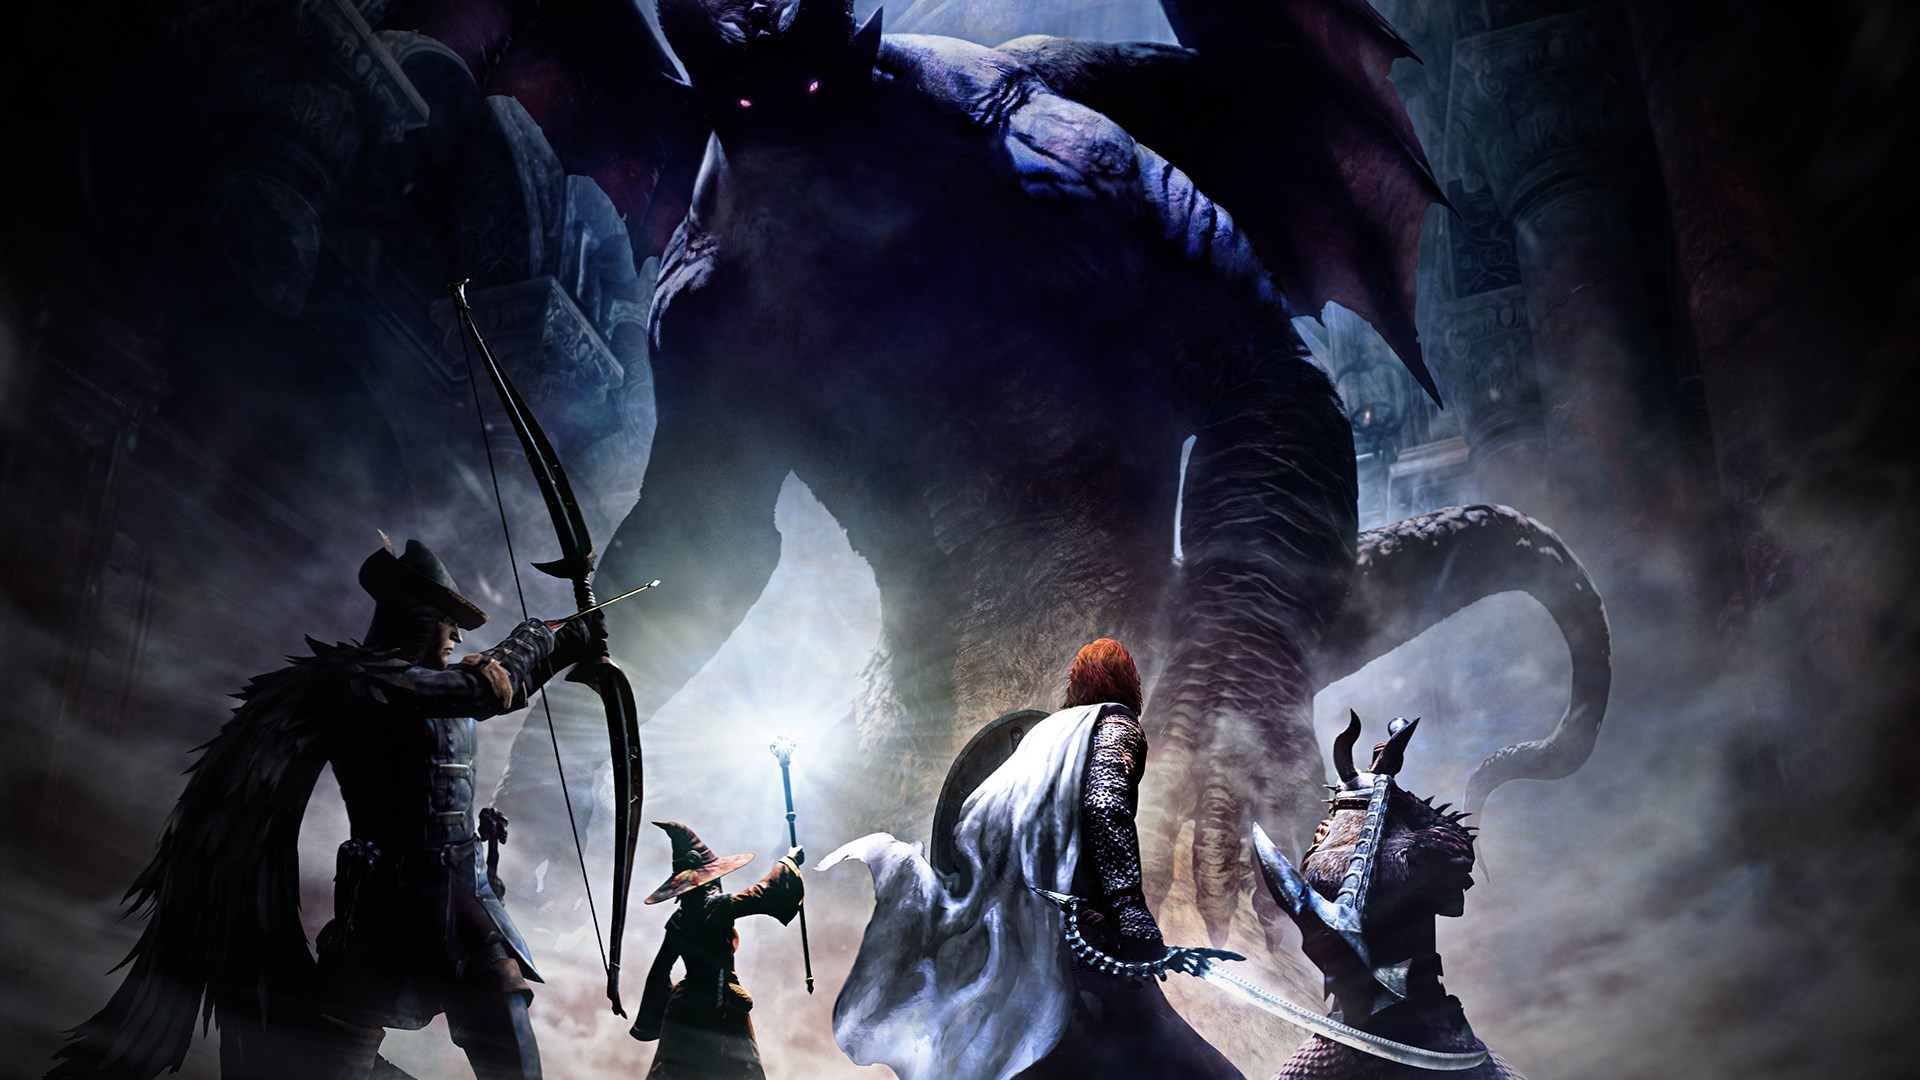 Dragons Dogma: Dark Arisen STEAM KEY DIGITAL